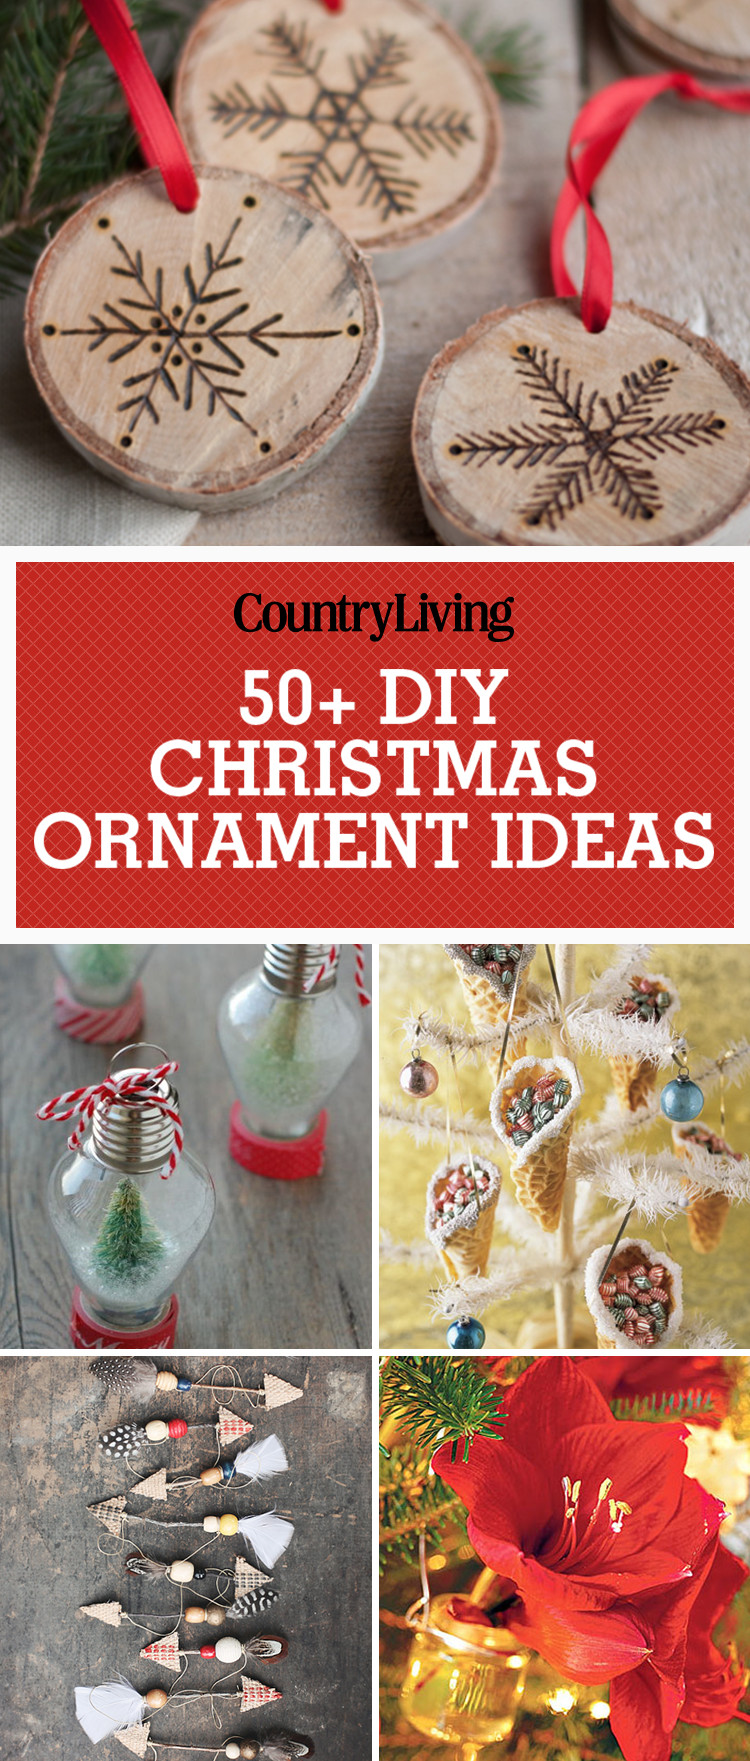 DIY Christmas Ornaments Ideas
 55 Homemade Christmas Ornaments DIY Crafts with